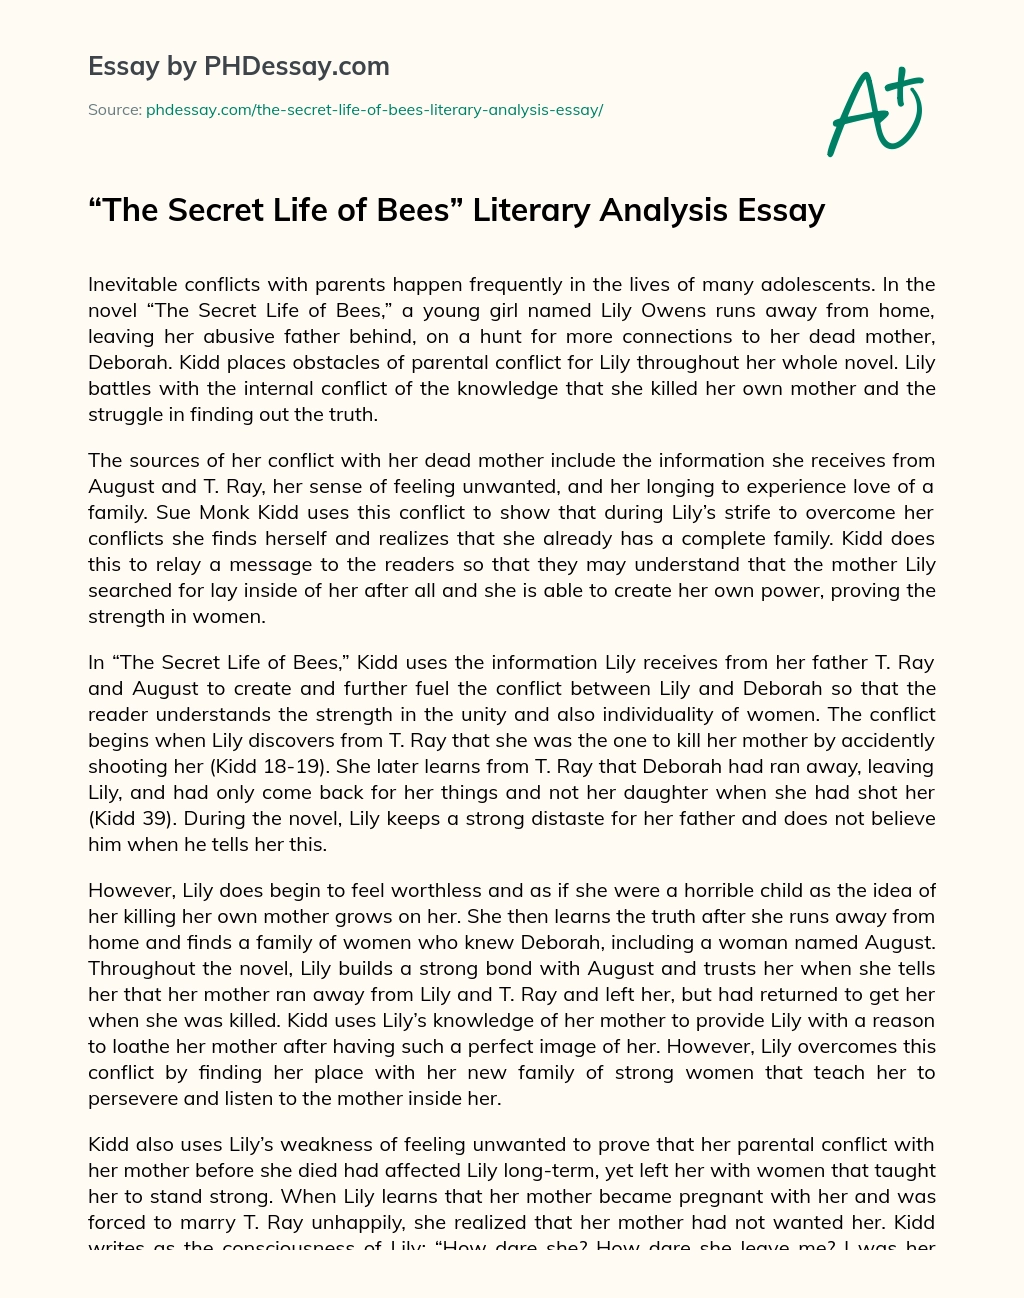 The Secret Life of Bees Literary Analysis Essay essay